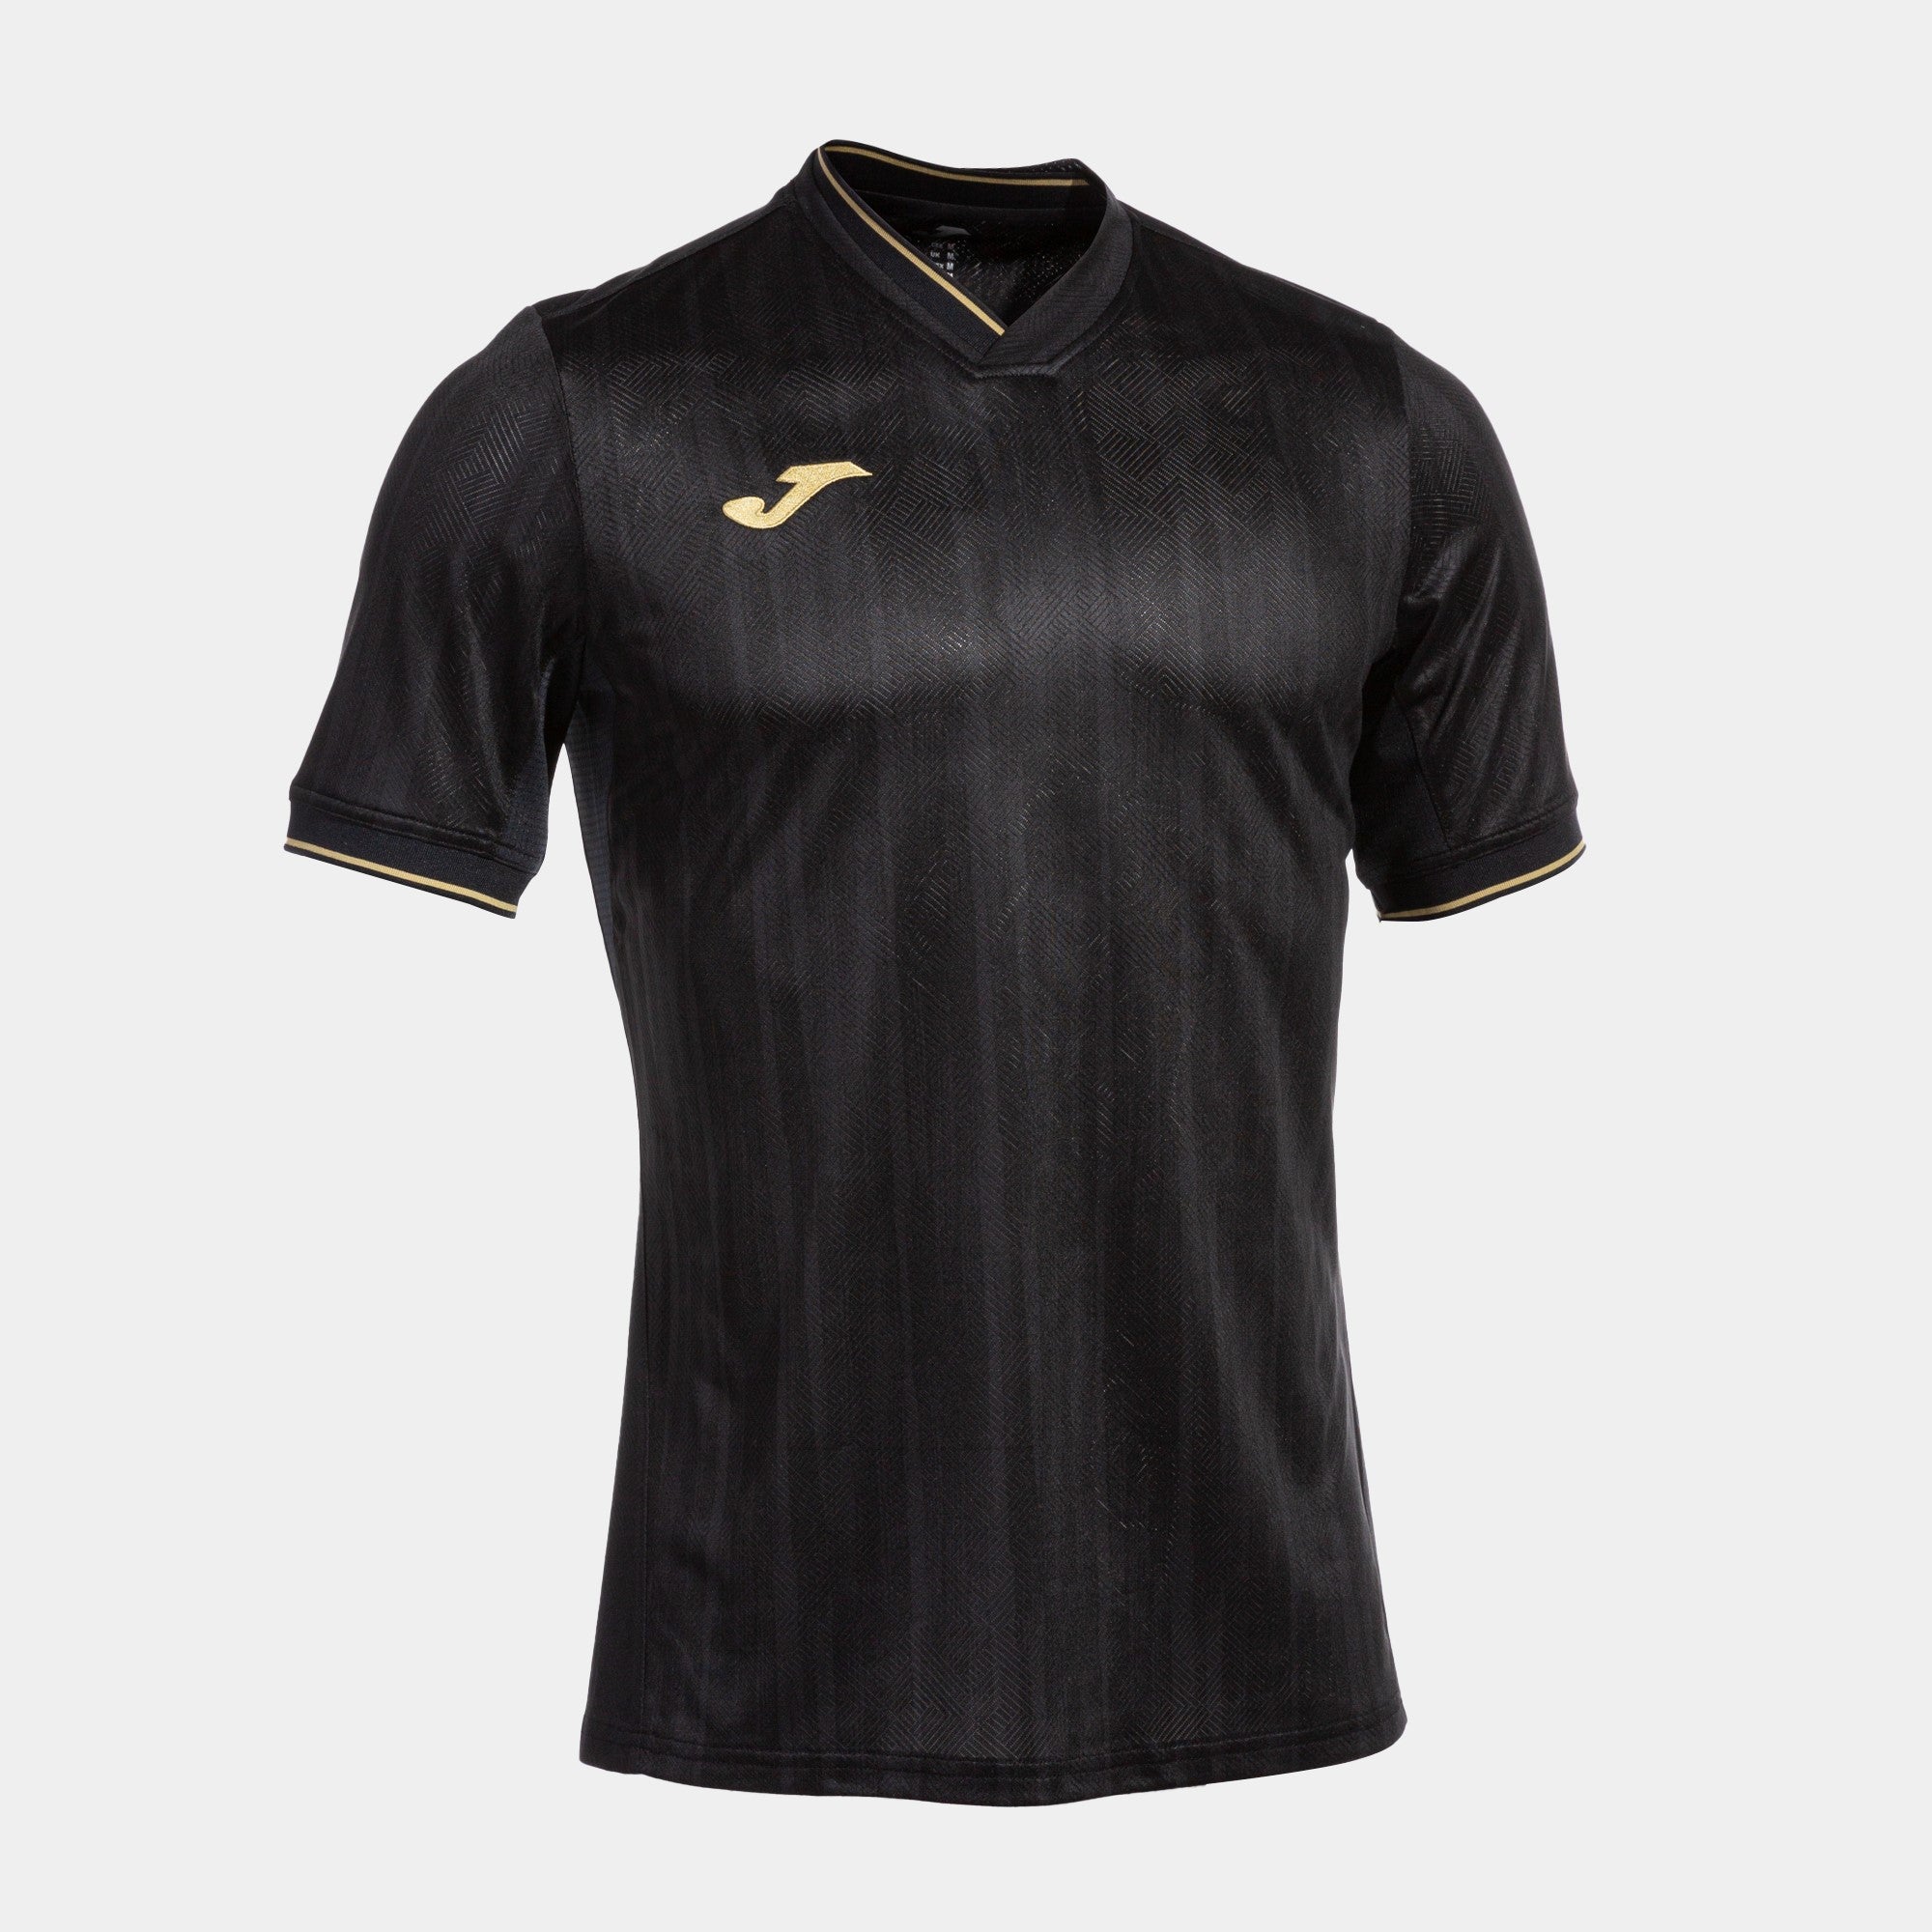 Joma Gold VI Short Sleeved T-Shirt - Black/Gold